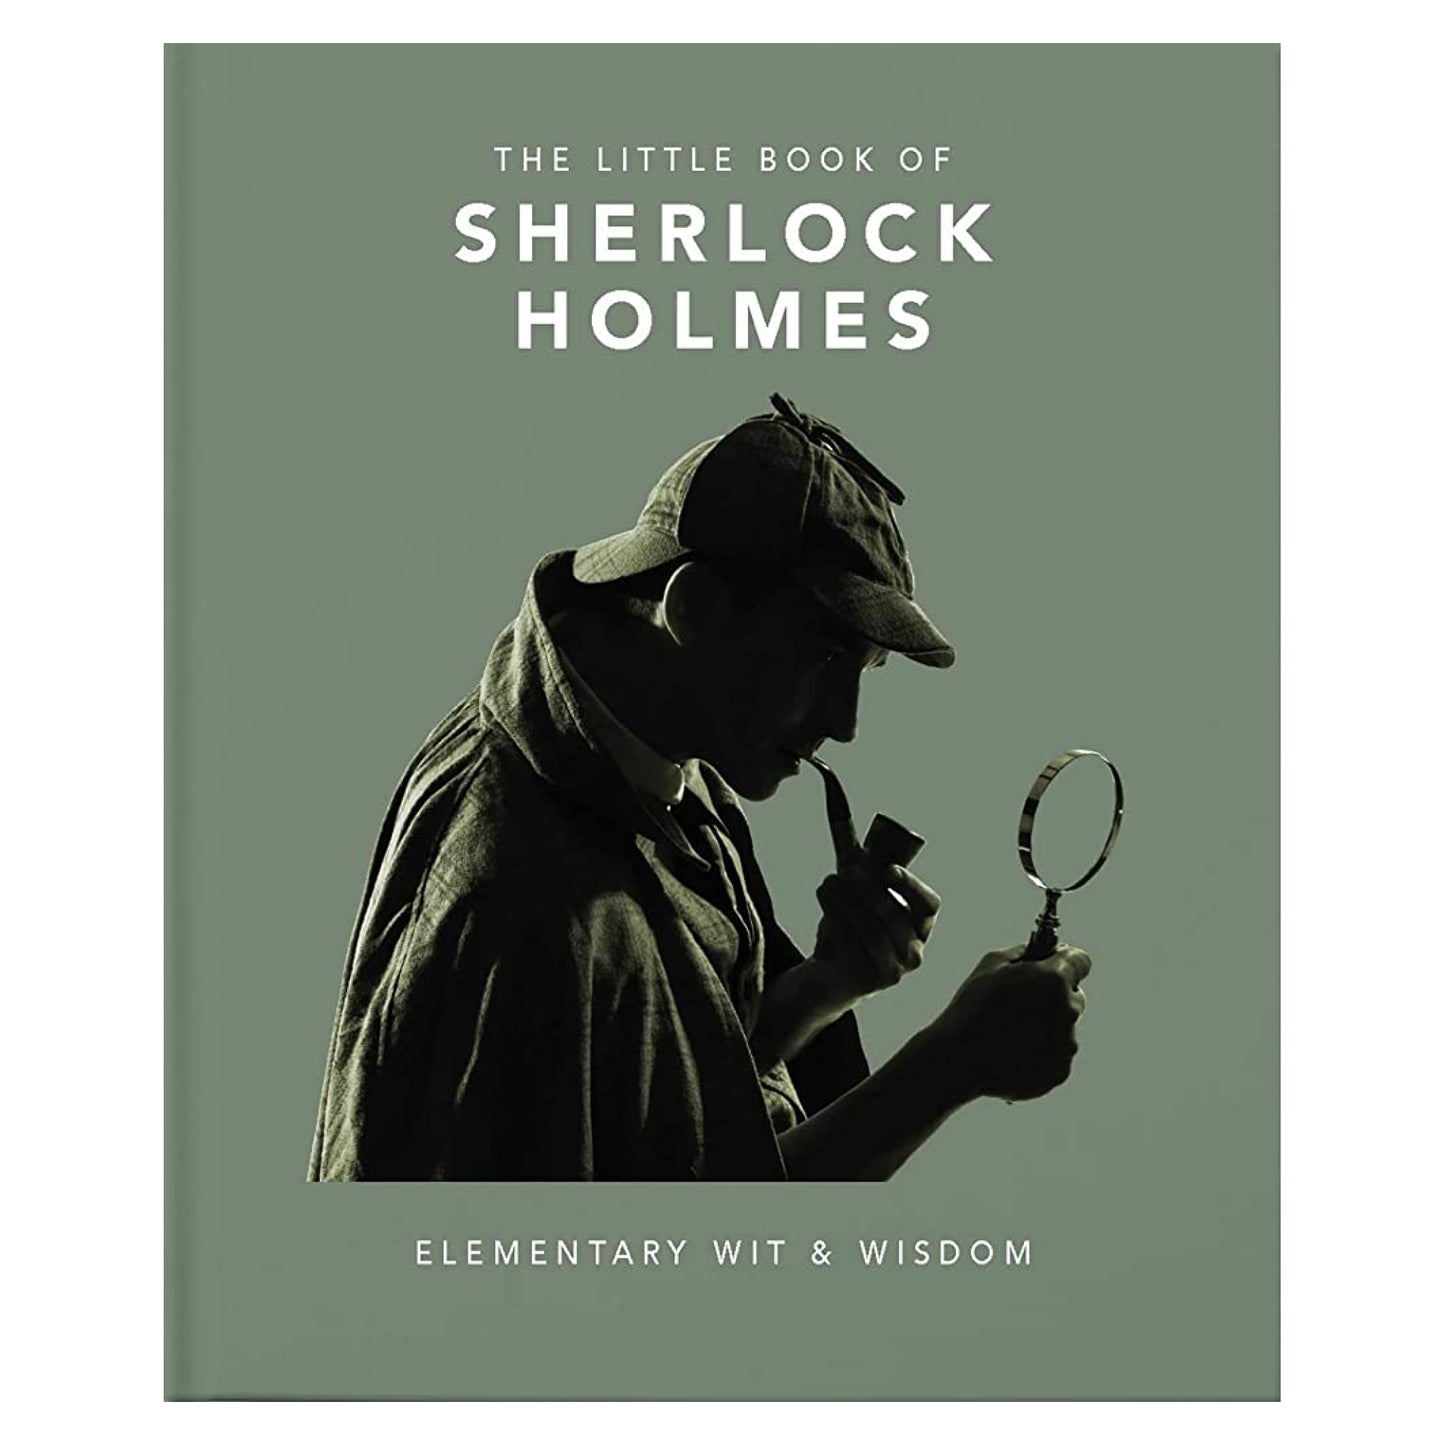 The Little Book of Sherlock Holmes